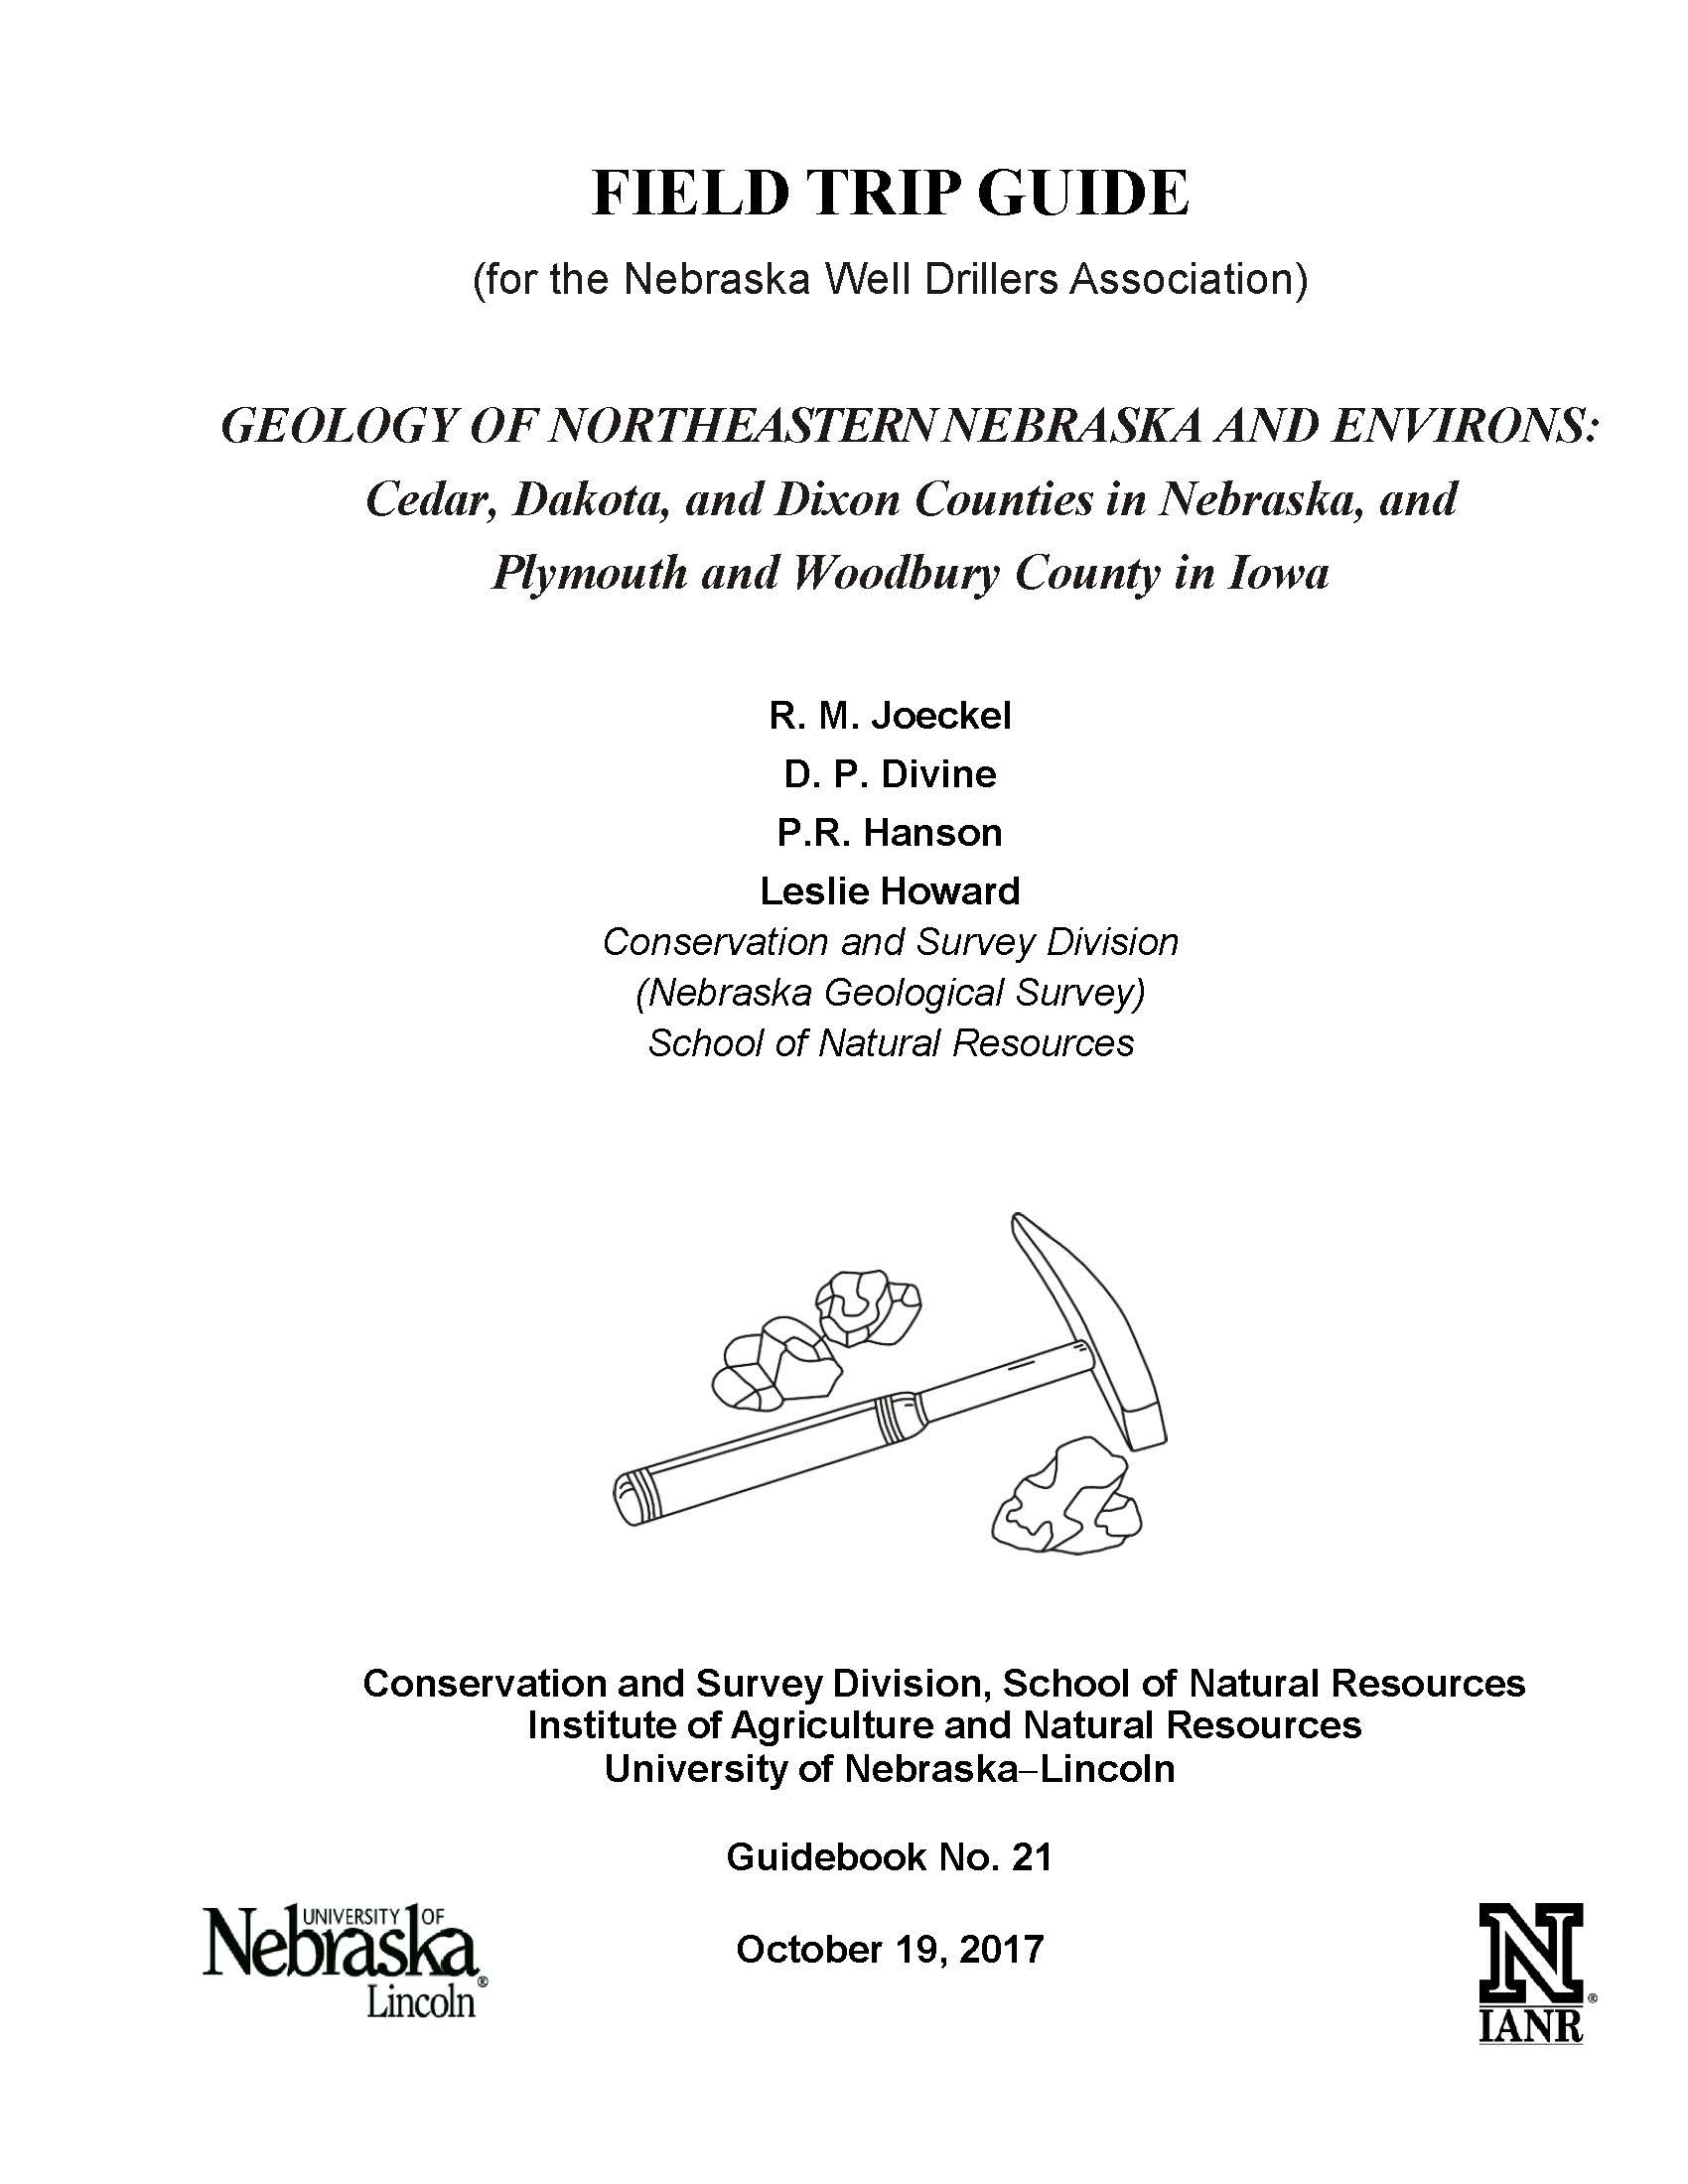 Geology Of Northeastern Nebraska And Environs: Cedar, Dakota, and Dixon Counties in Nebraska, and Plymouth and Woodbury County in Iowa (GB-21)